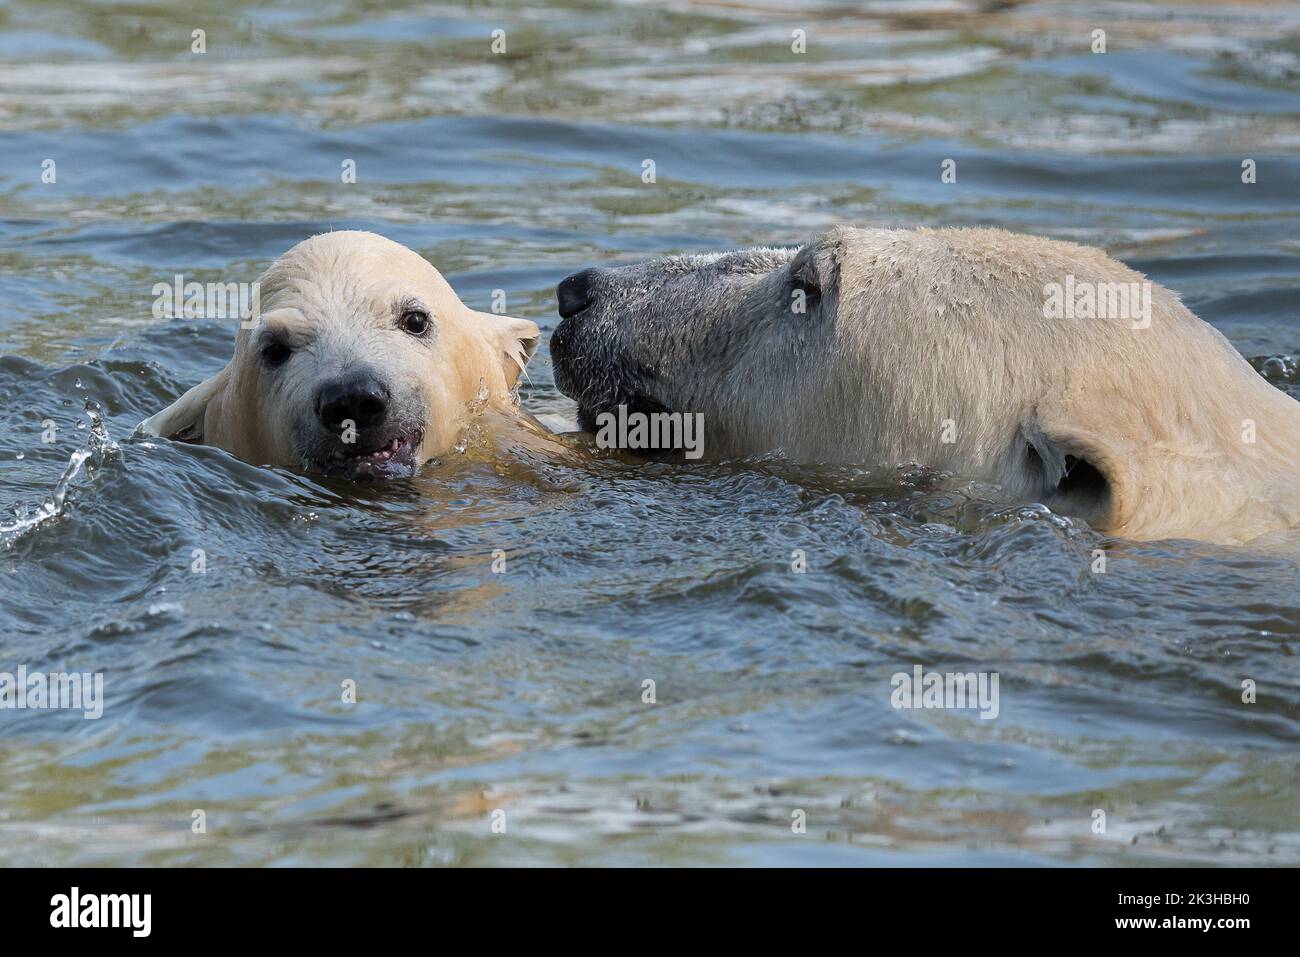 Polar bear with cub swimming in water Stock Photo